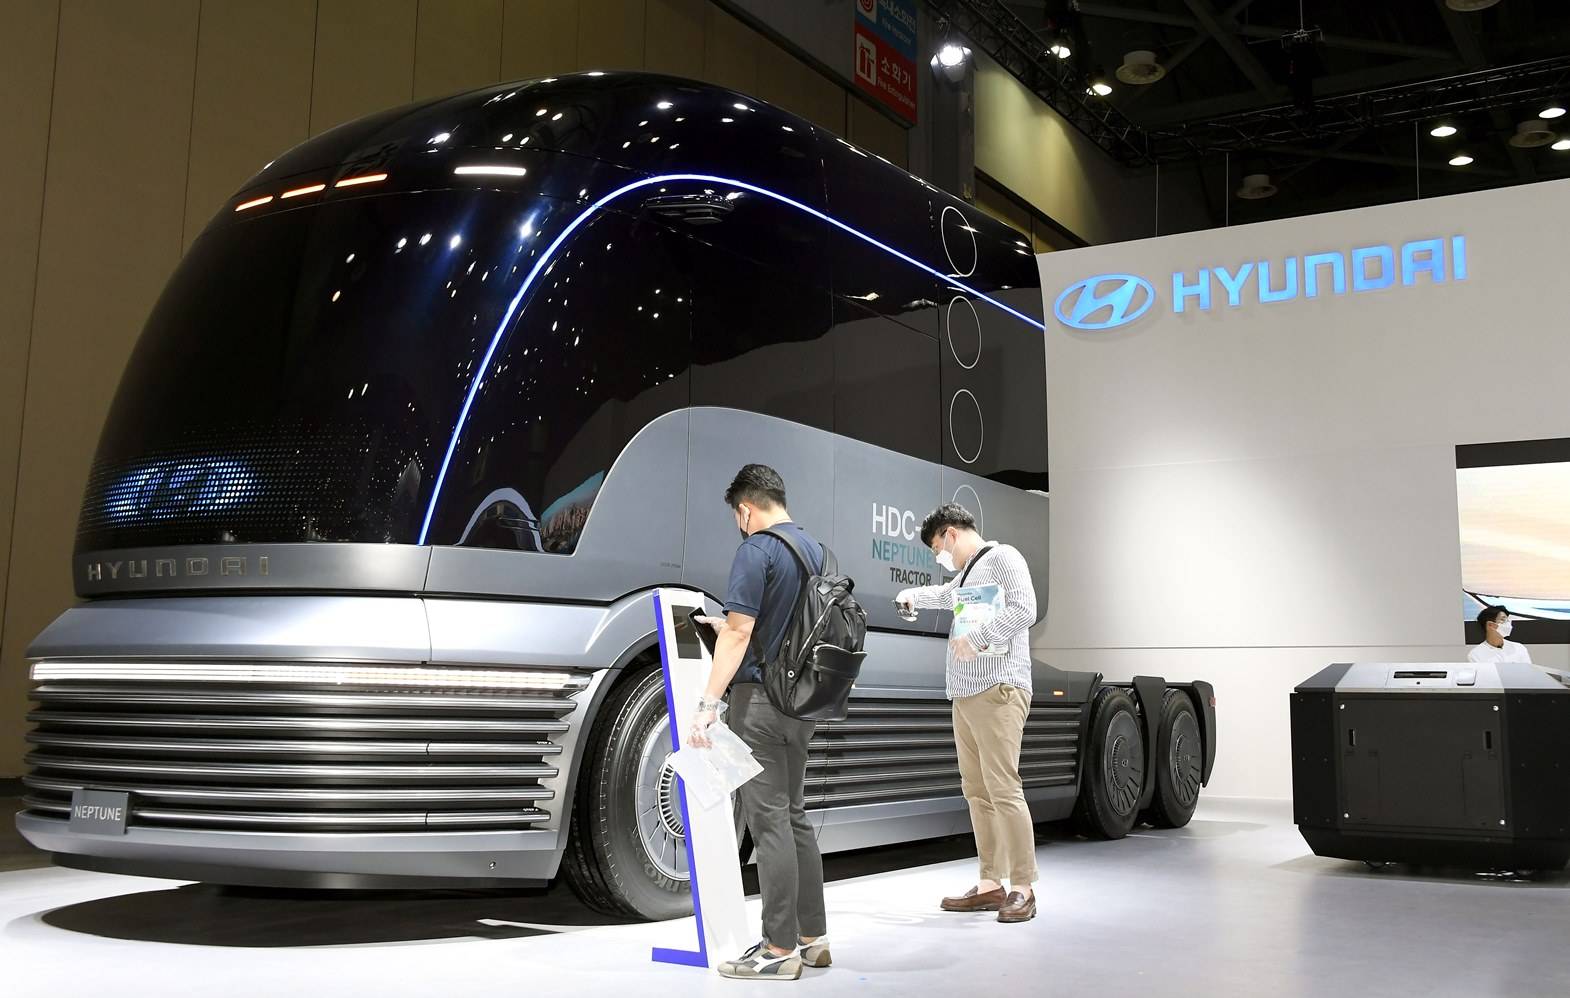 Hyundai hdc-6 neptune: hydrogen semi truck is here.